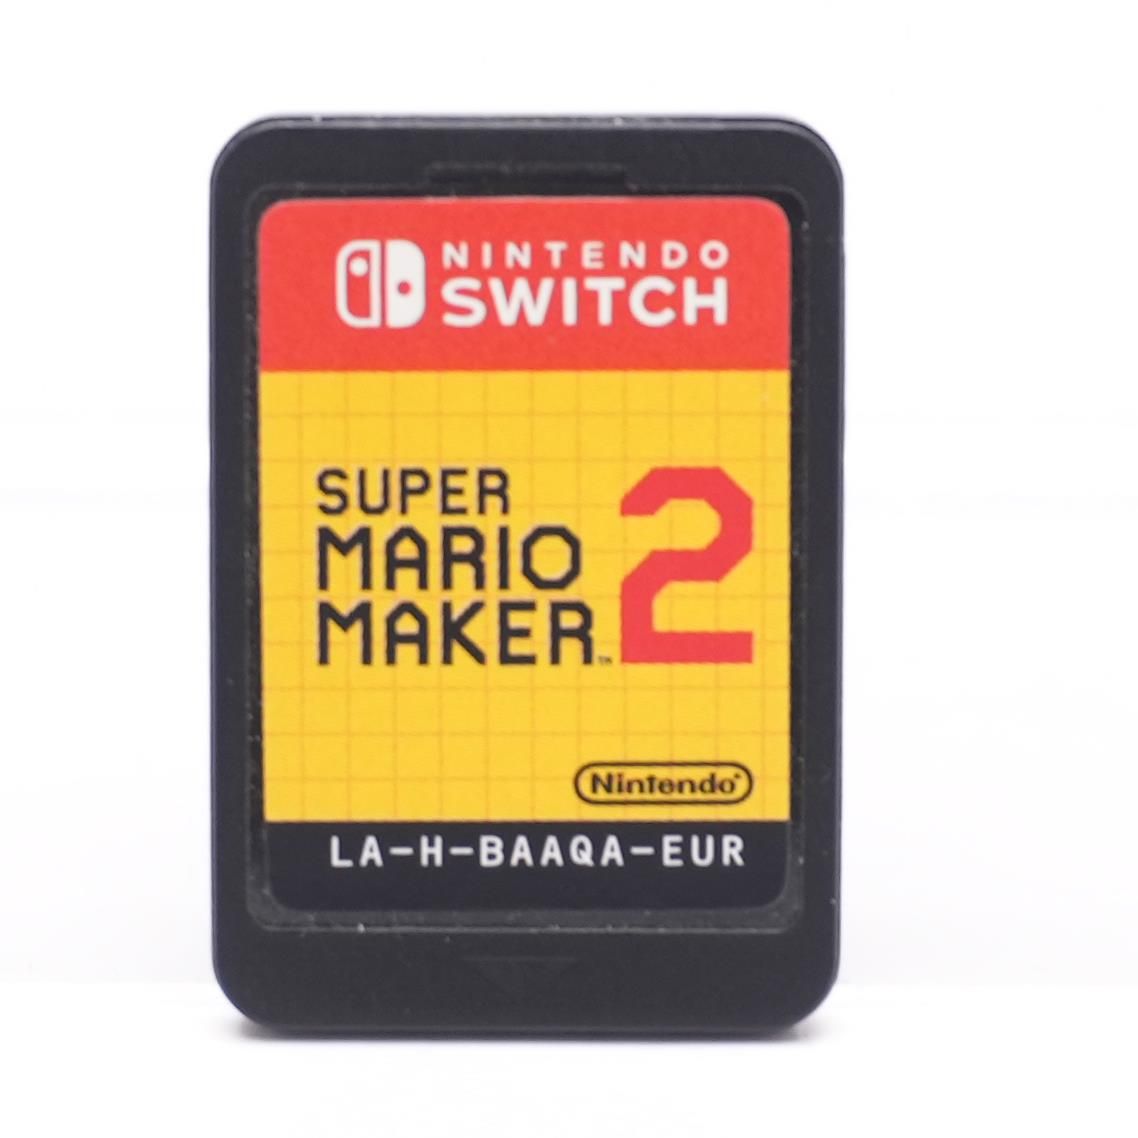 2 Nintendo Mario Switch Super Baggage – Ver.) (European Unclaimed For Maker